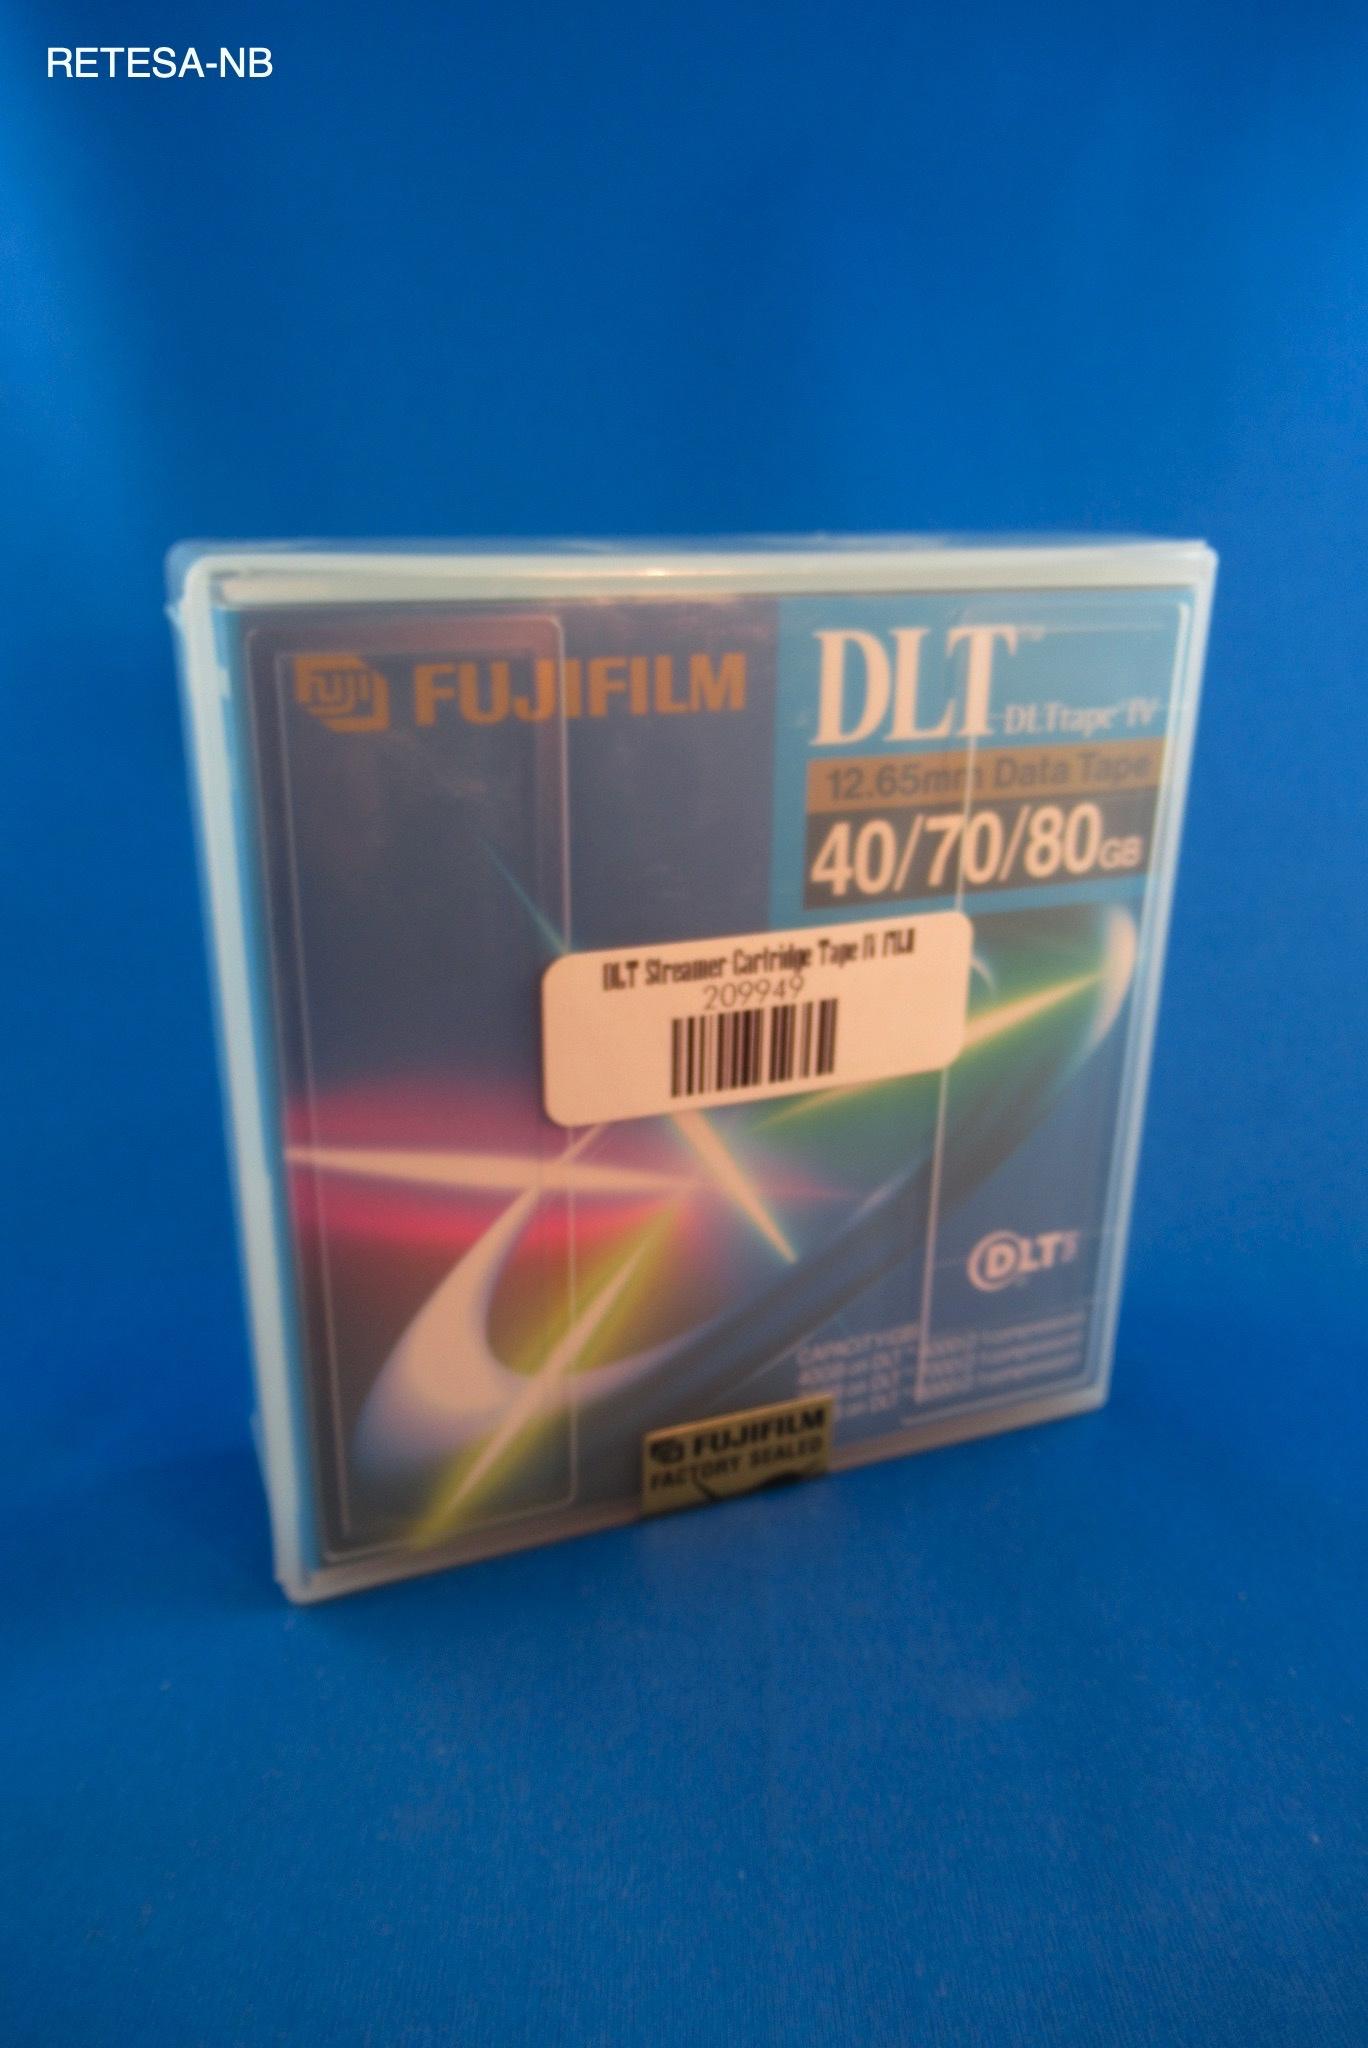 DLT-Streamer-Cartridge Tape IV FUJI 42681